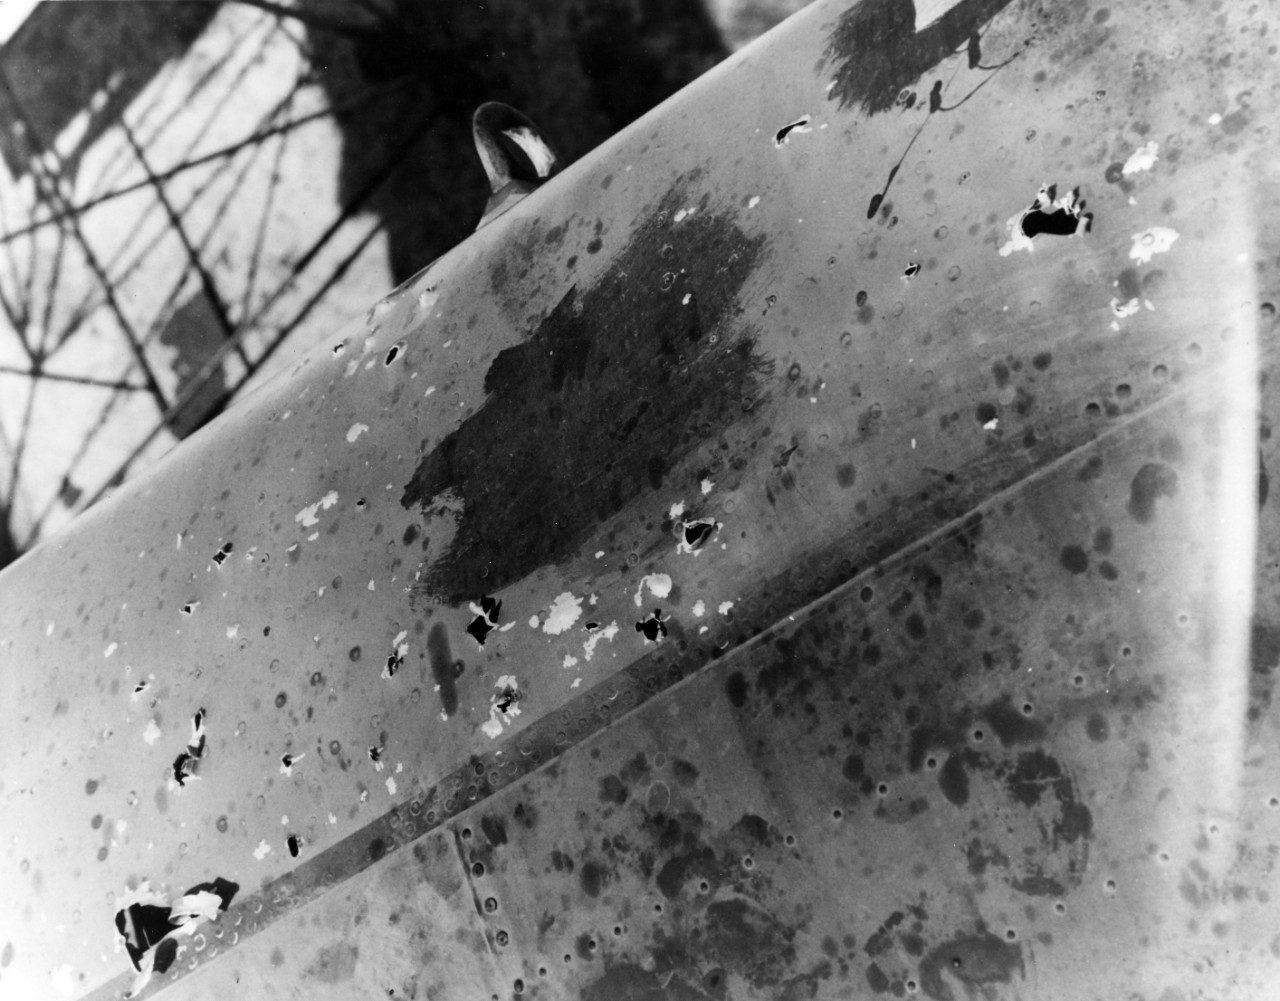 Anti-aircraft gunfire damage to starboard wing of a PBM "Mariner" aircraft